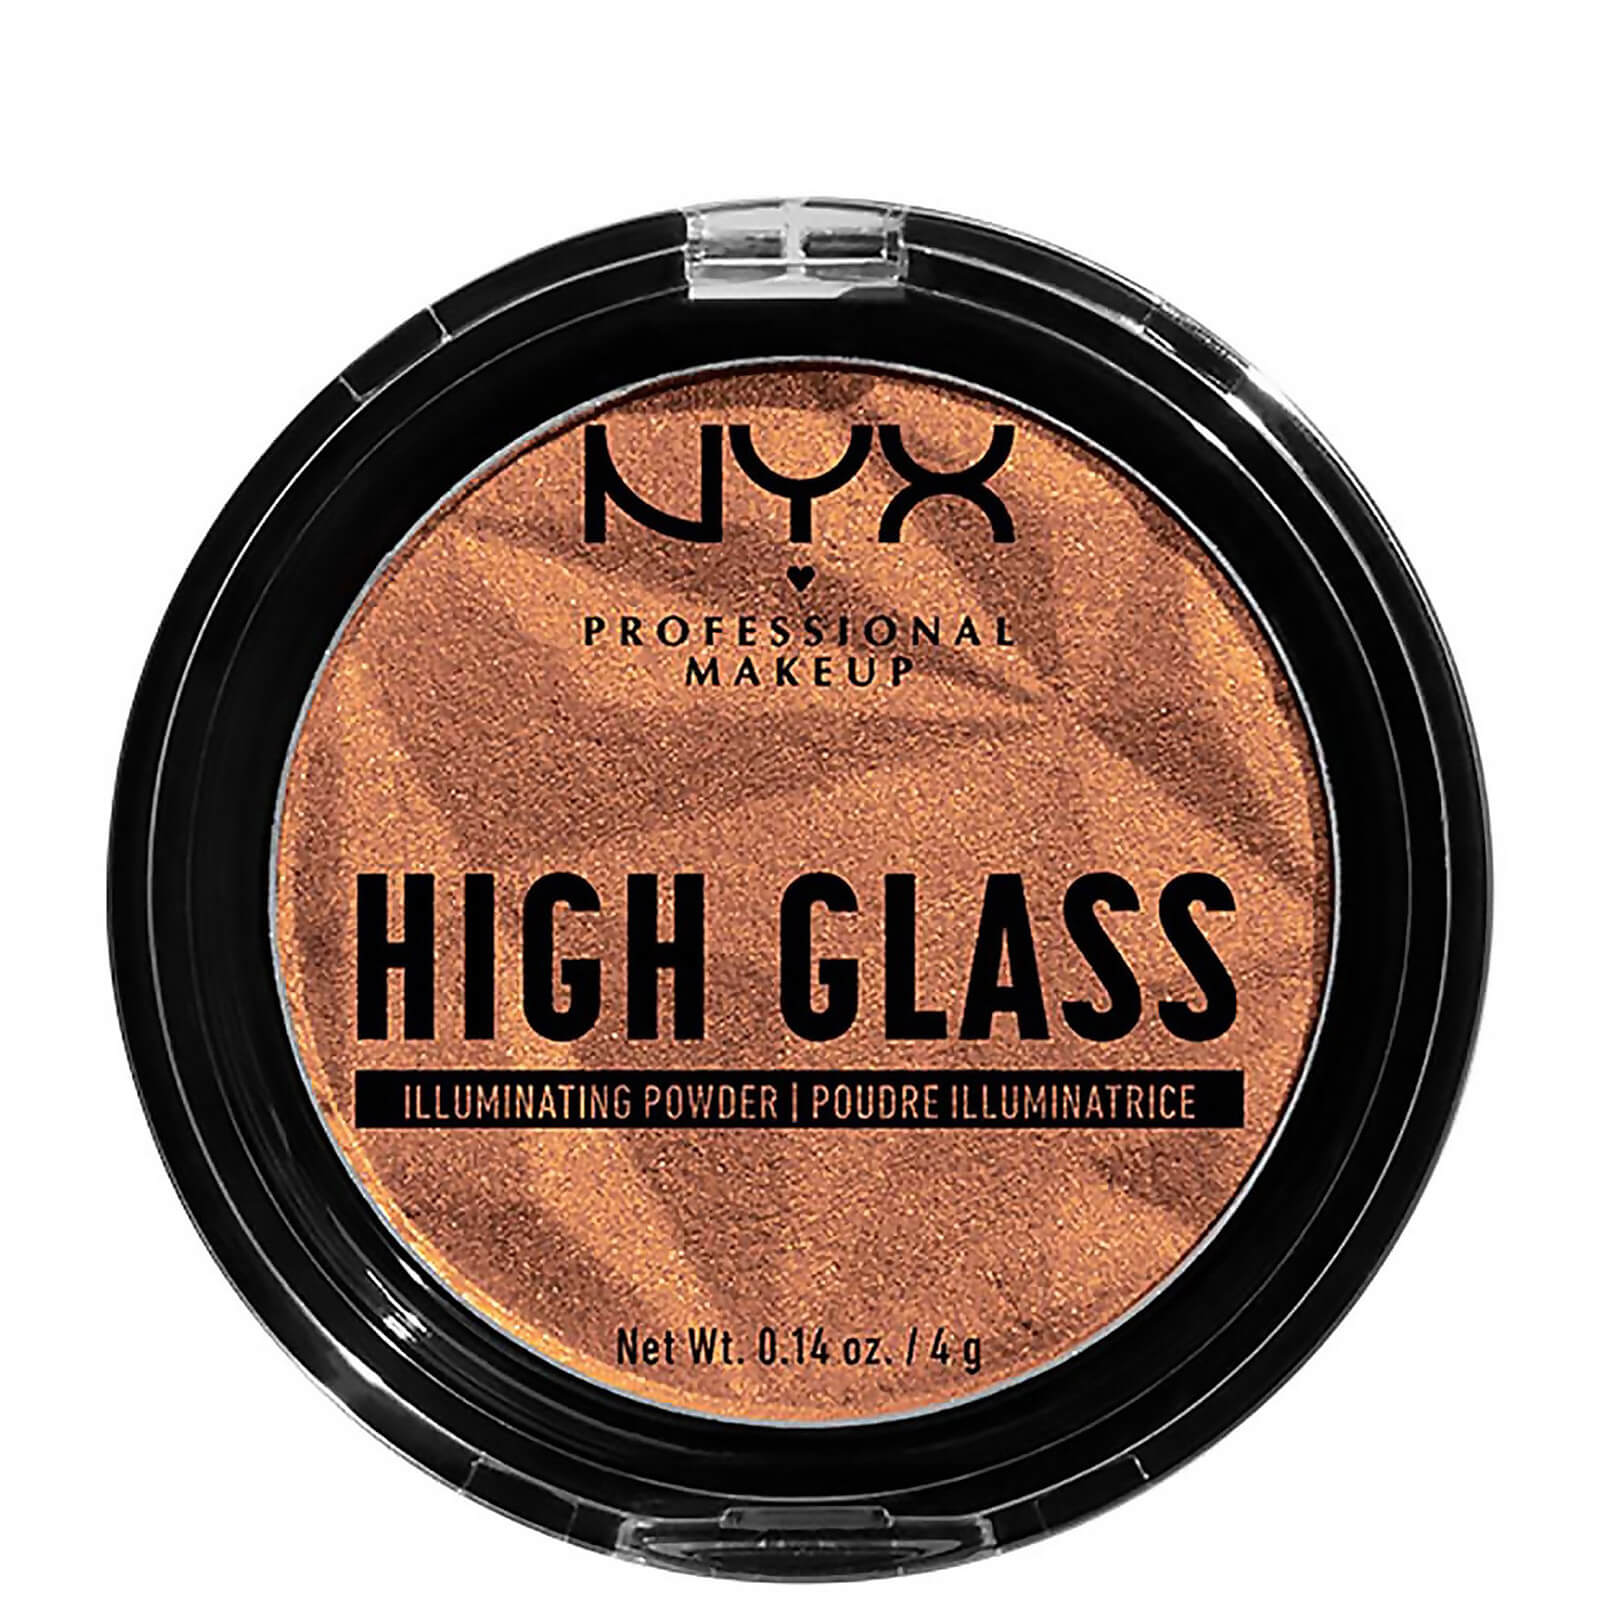 NYX Professional Makeup High Glass Illuminating Powder (Various Shades) - Golden Hour